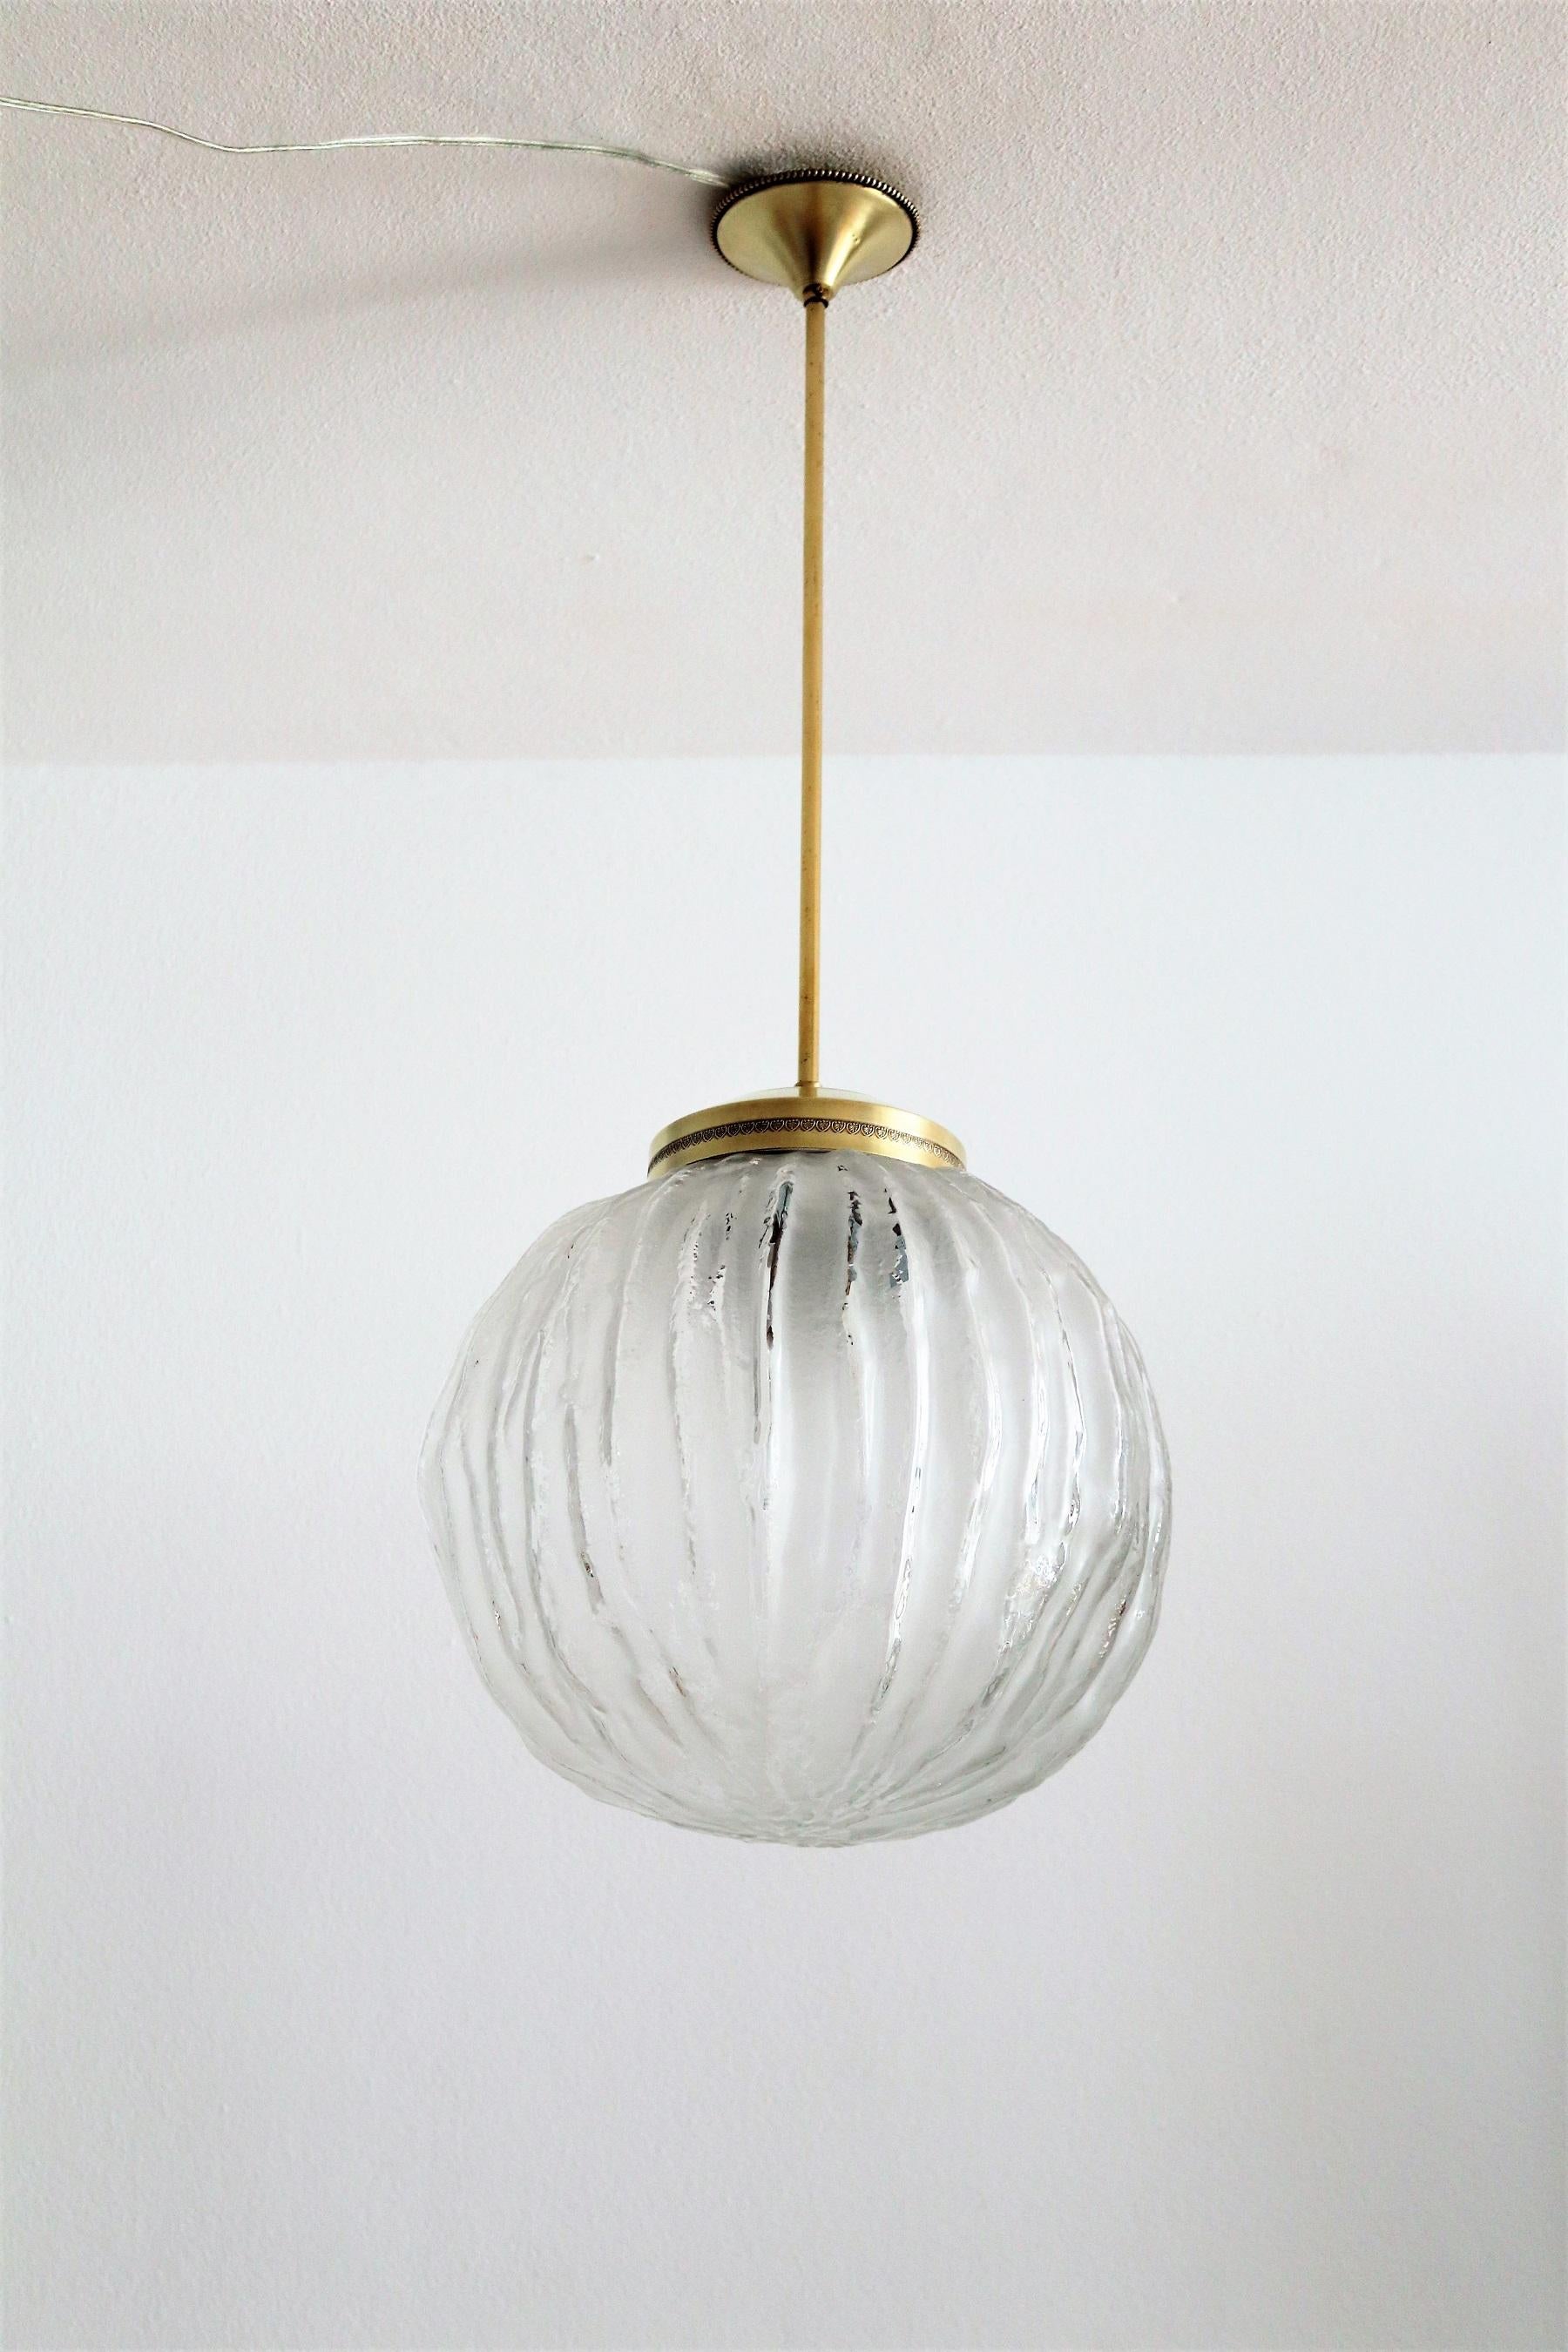 Italian Midcentury Glass und Brass Pendant Sphere, 1950s For Sale 5